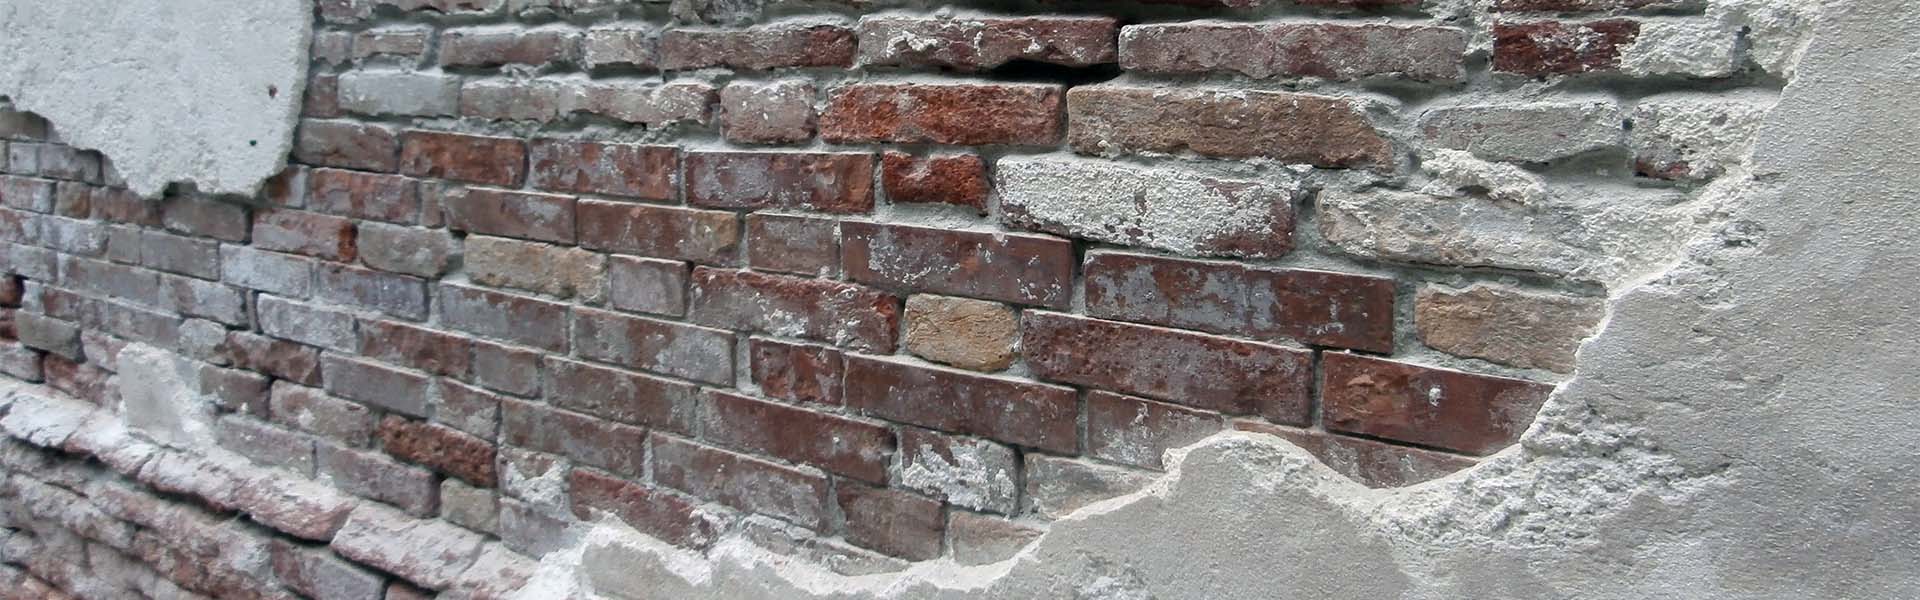 exposed brick masonry work